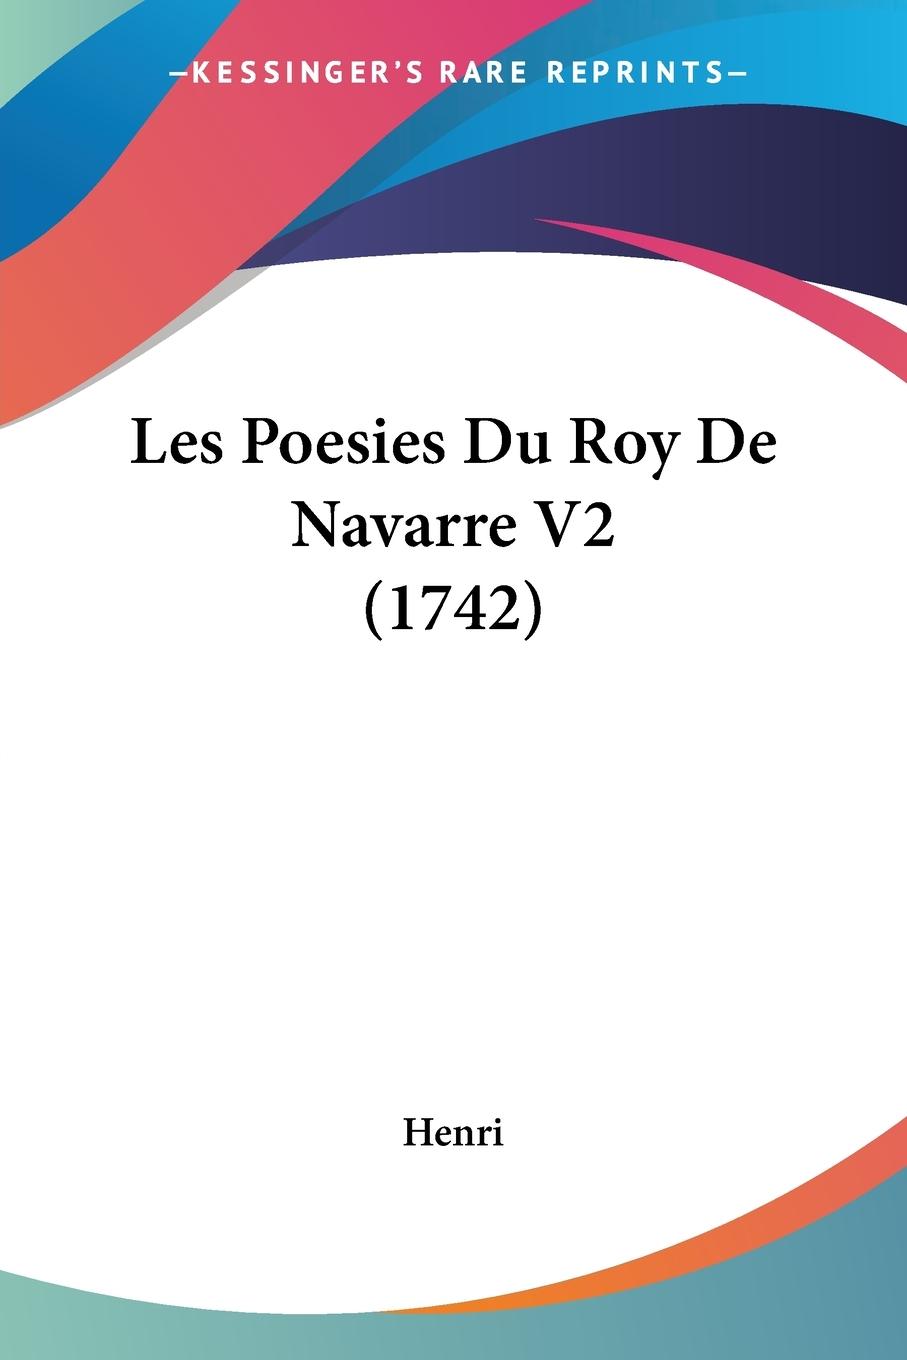 Les Poesies Du Roy De Navarre V2 (1742) - Henri